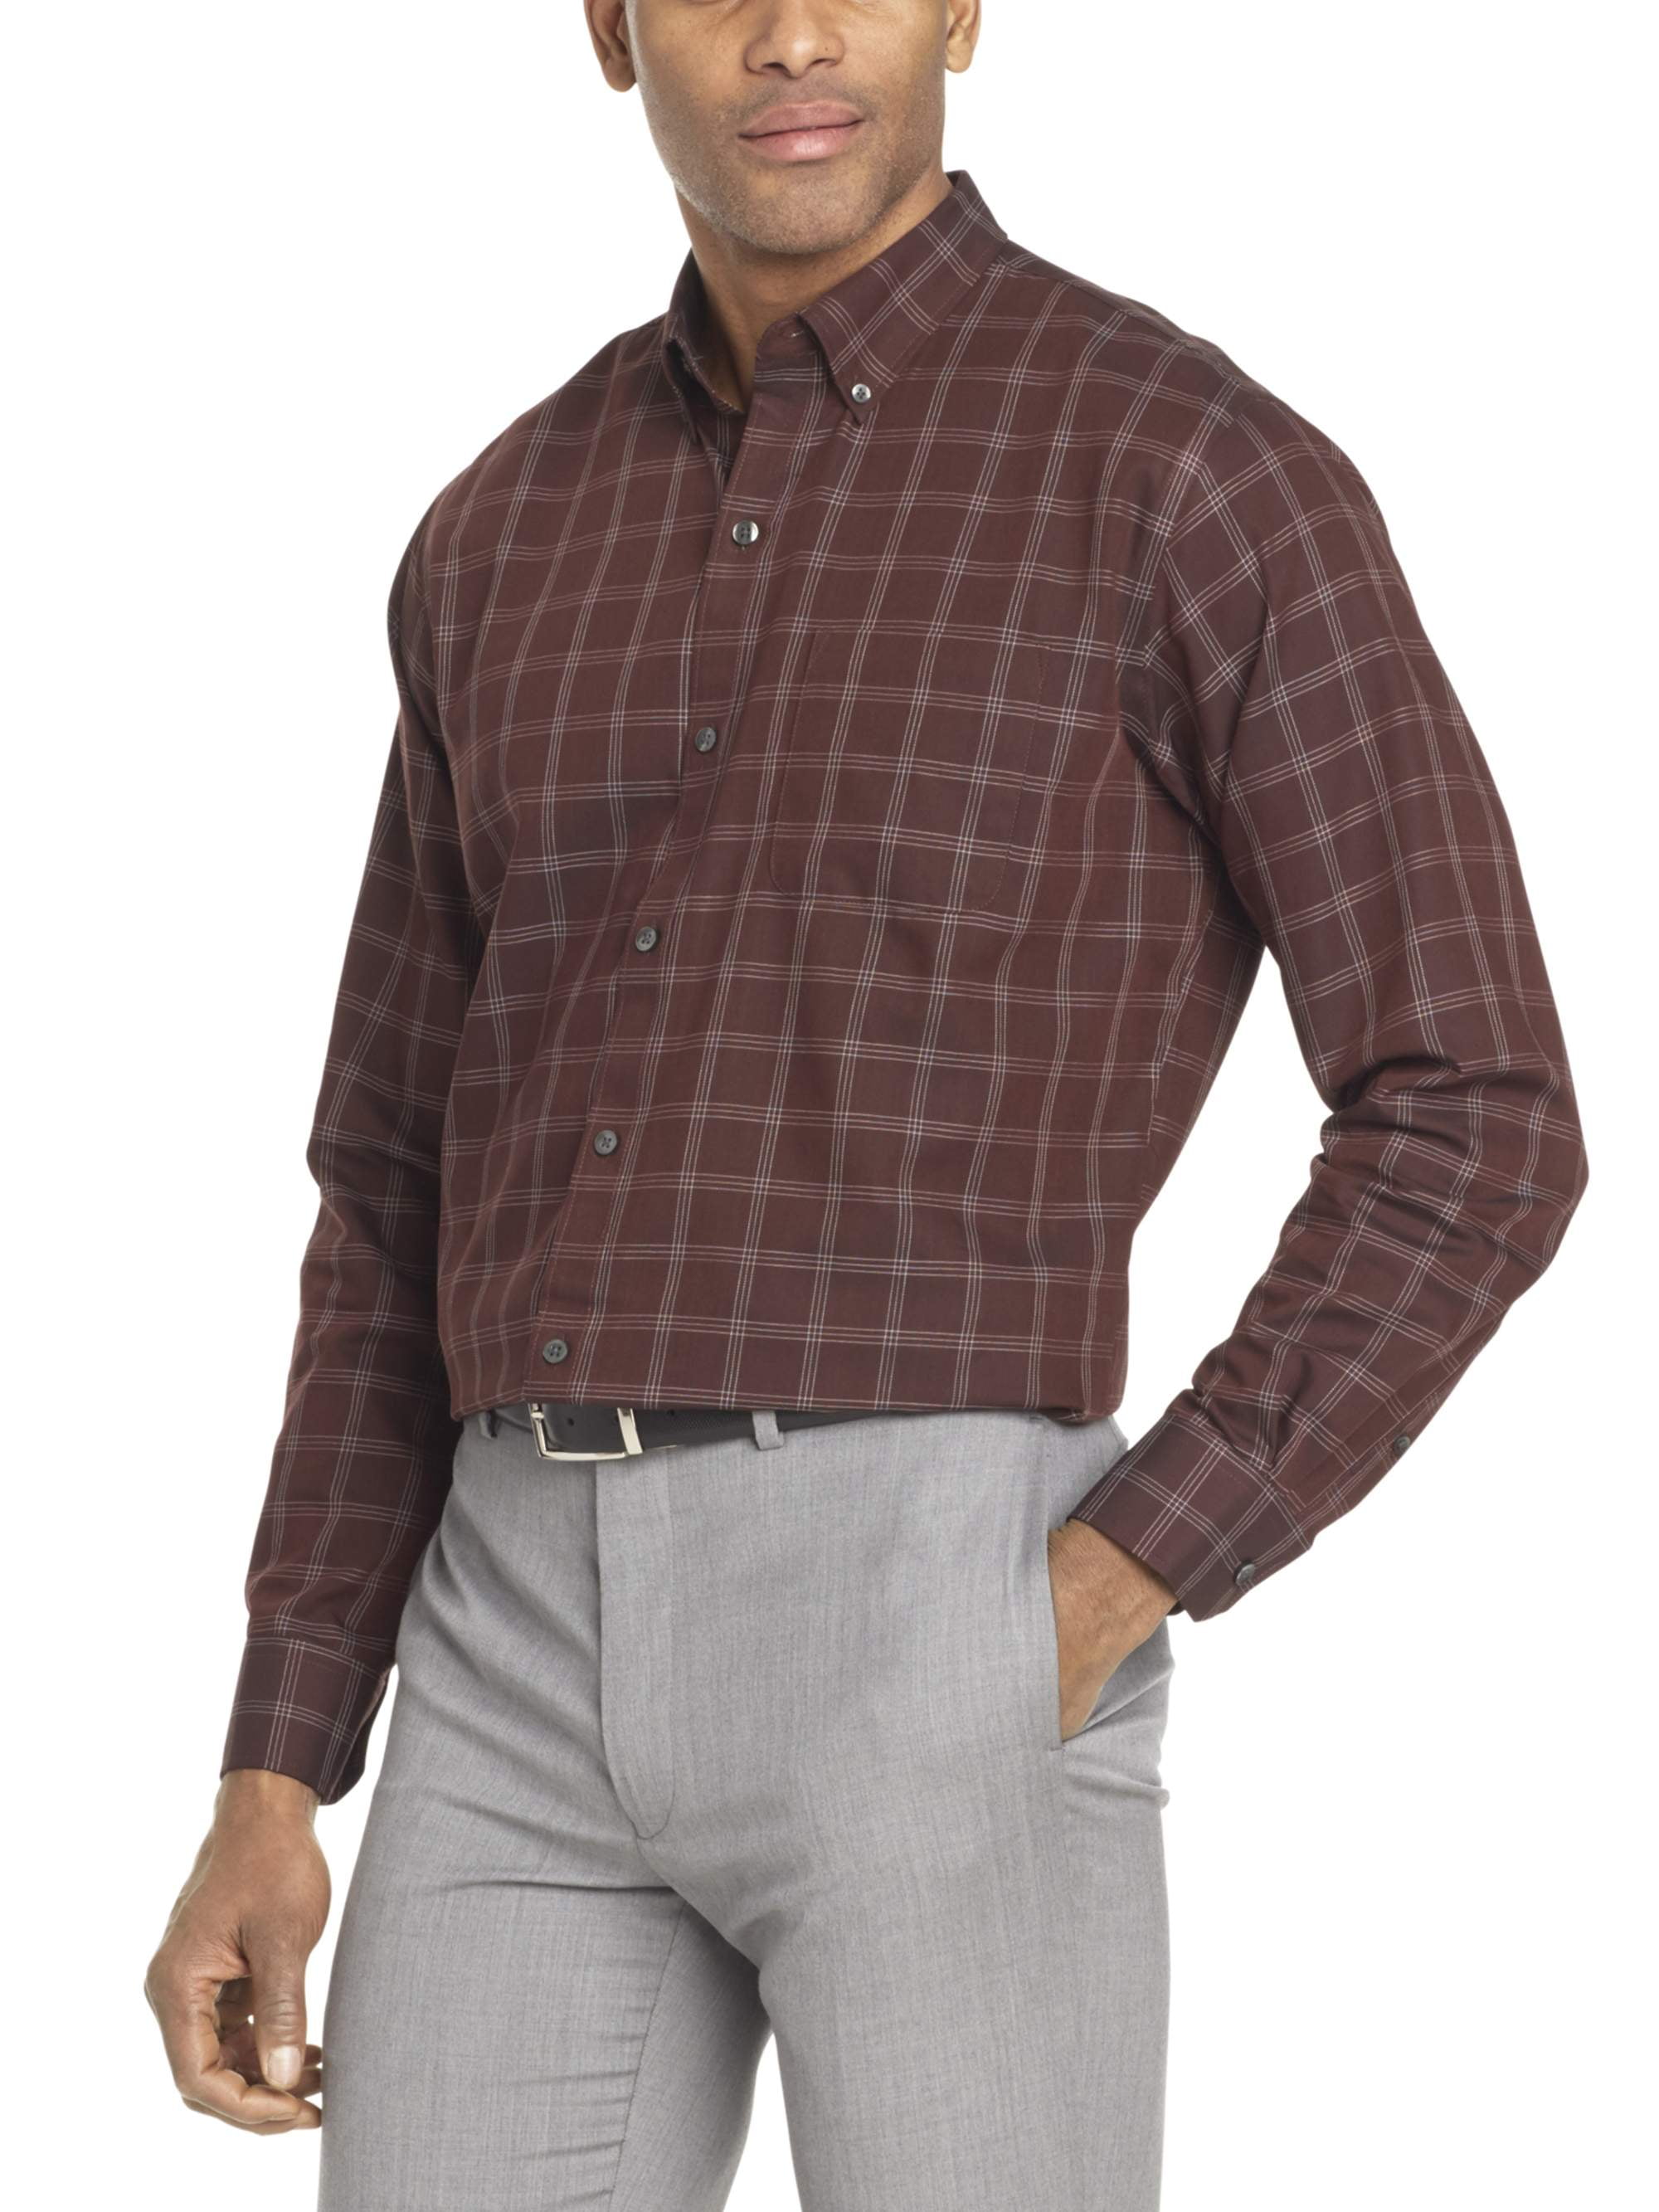 Van Heusen Casual Shirts : Buy Van Heusen Men Brown Slim Fit Check